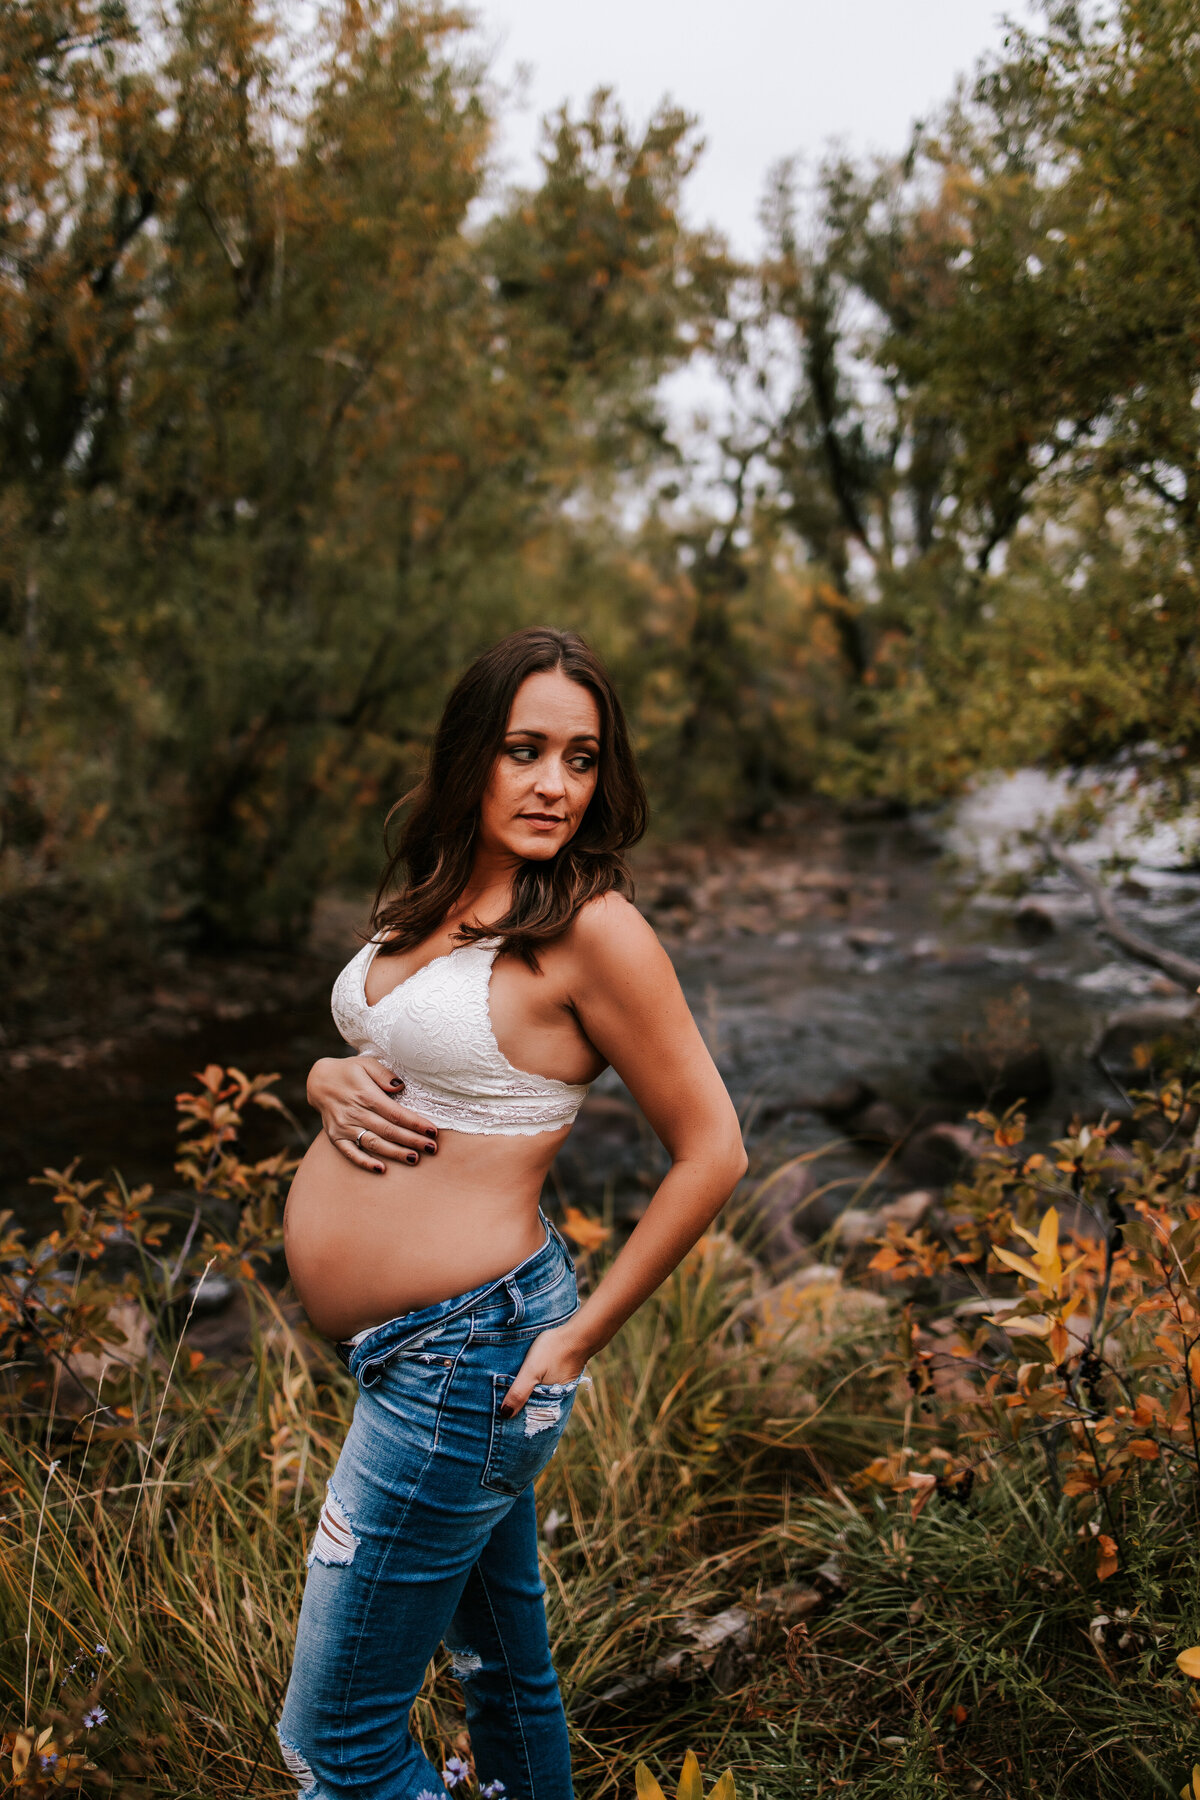 Colorado Maternity Photographer, Colorado Maternity Photos, Denver Maternity Photographer